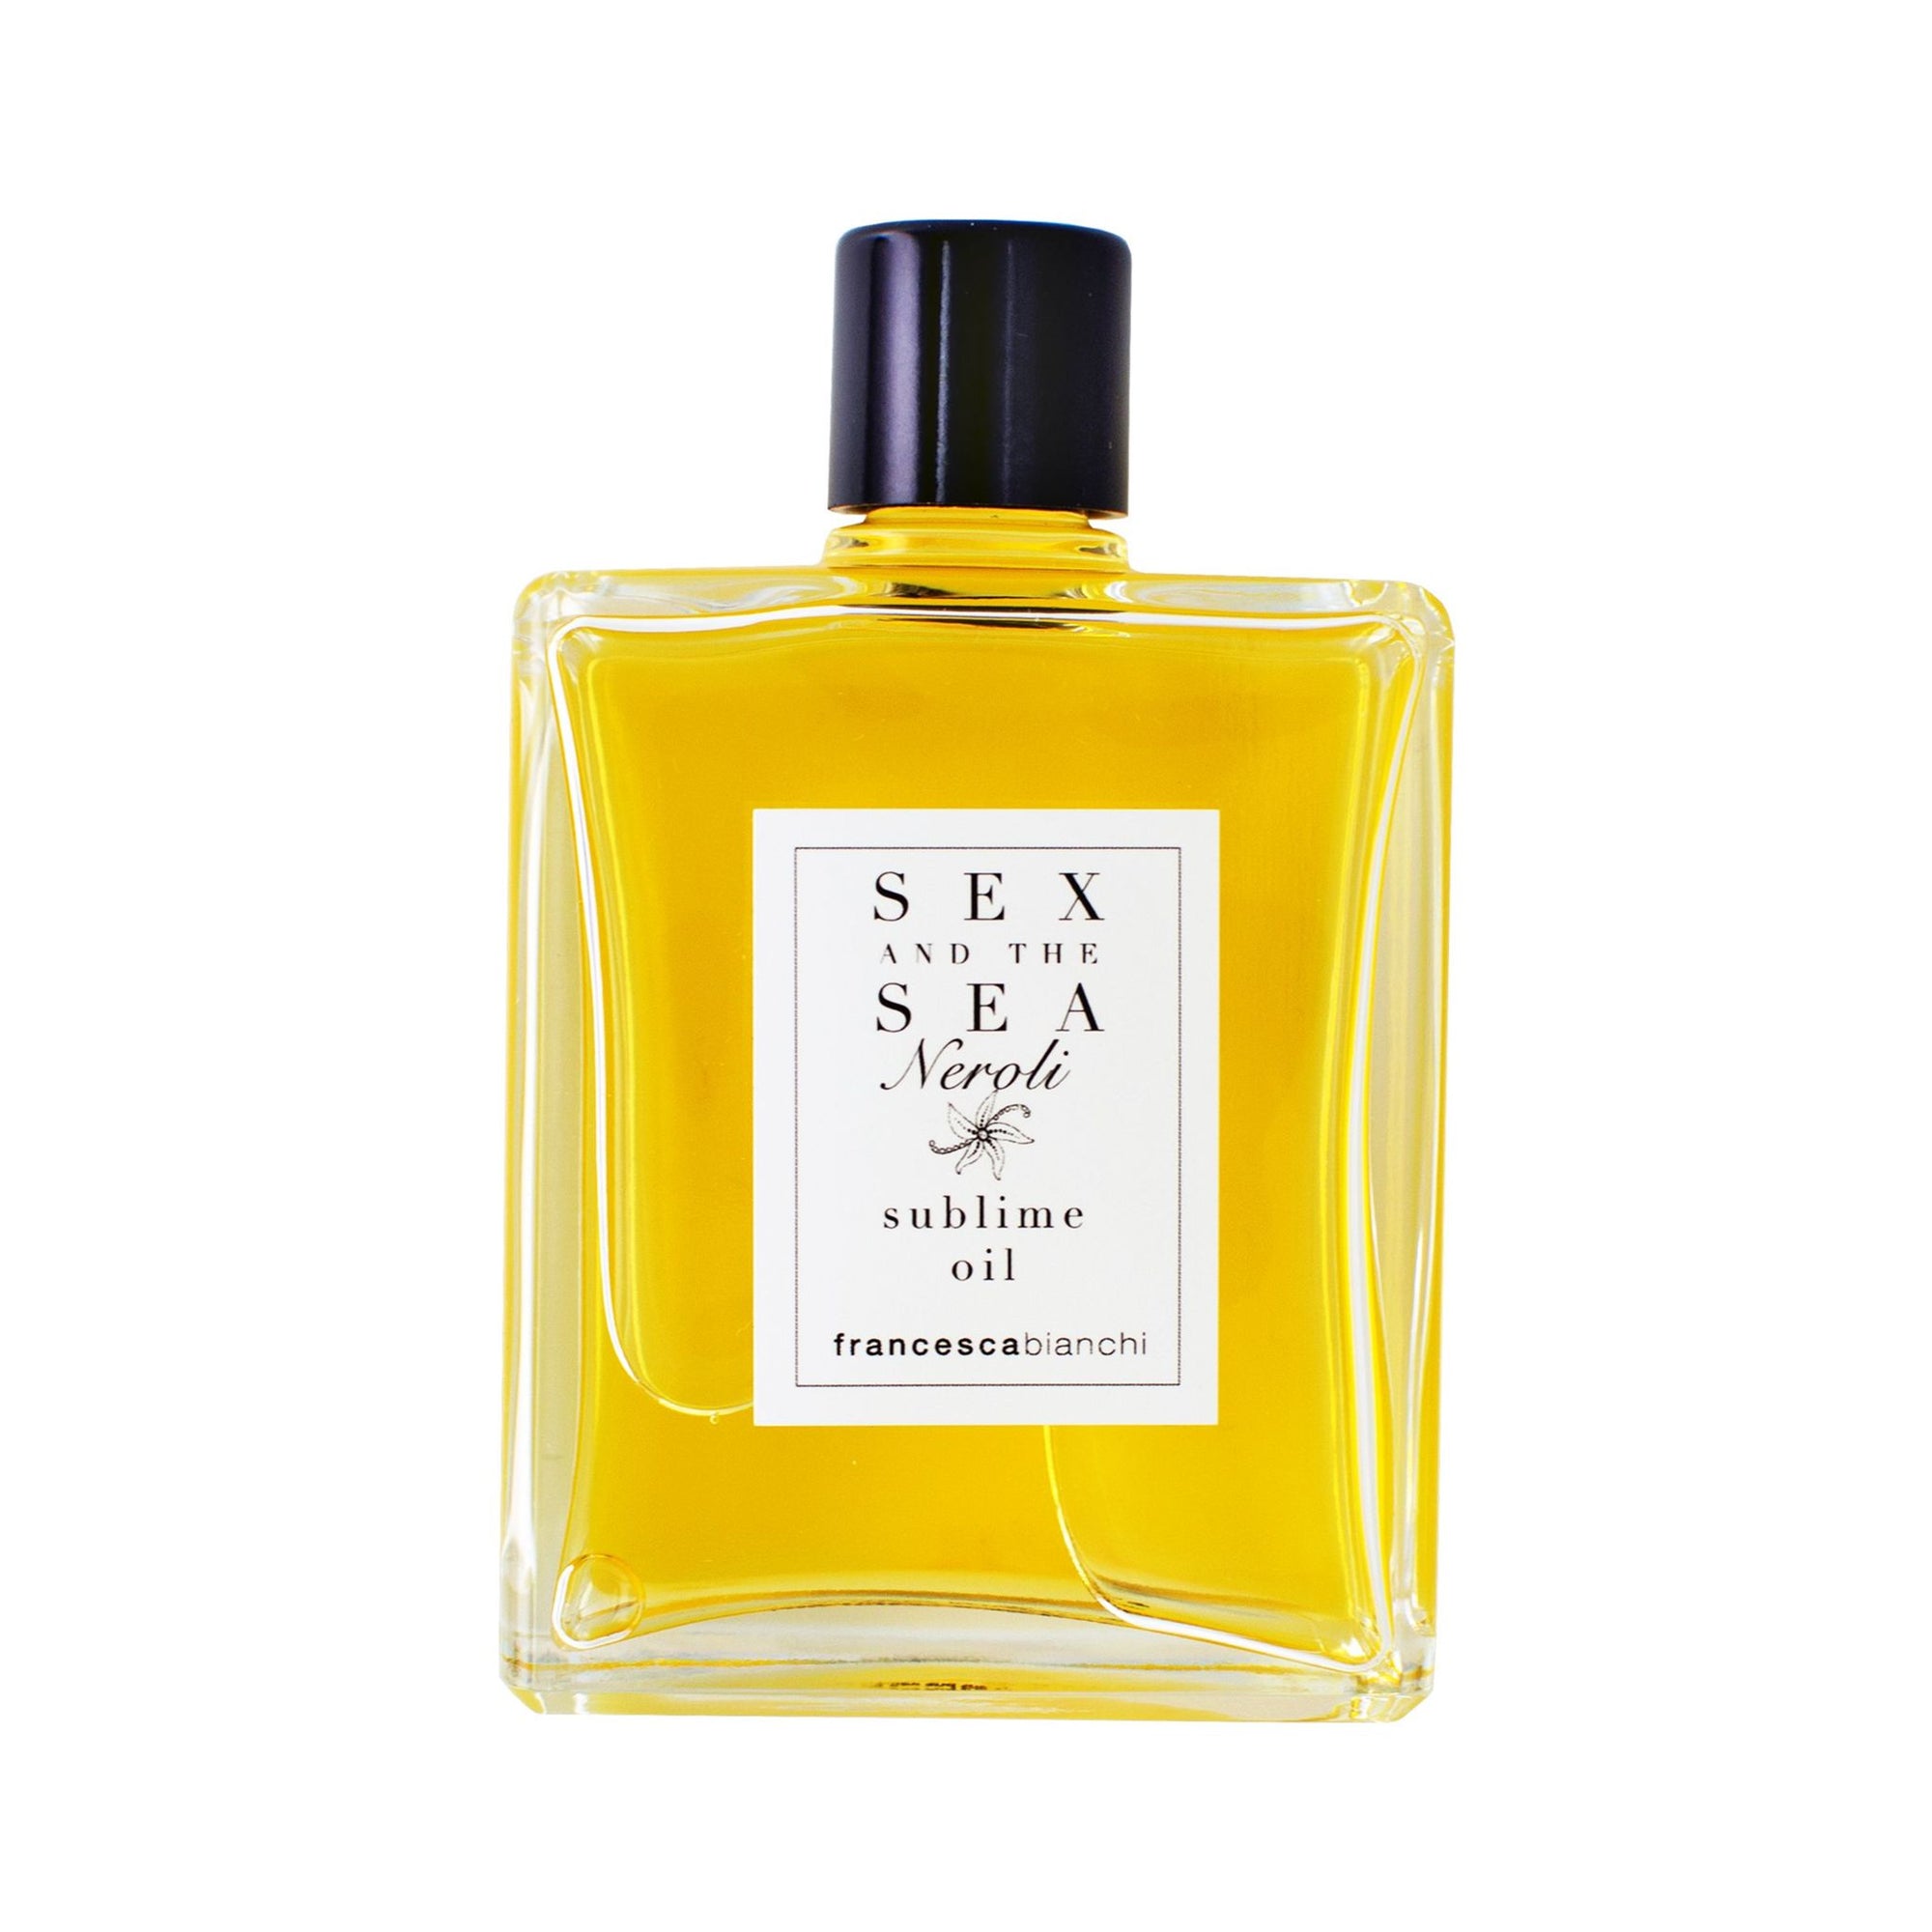 Sex and the Sea Neroli Sublime Oil